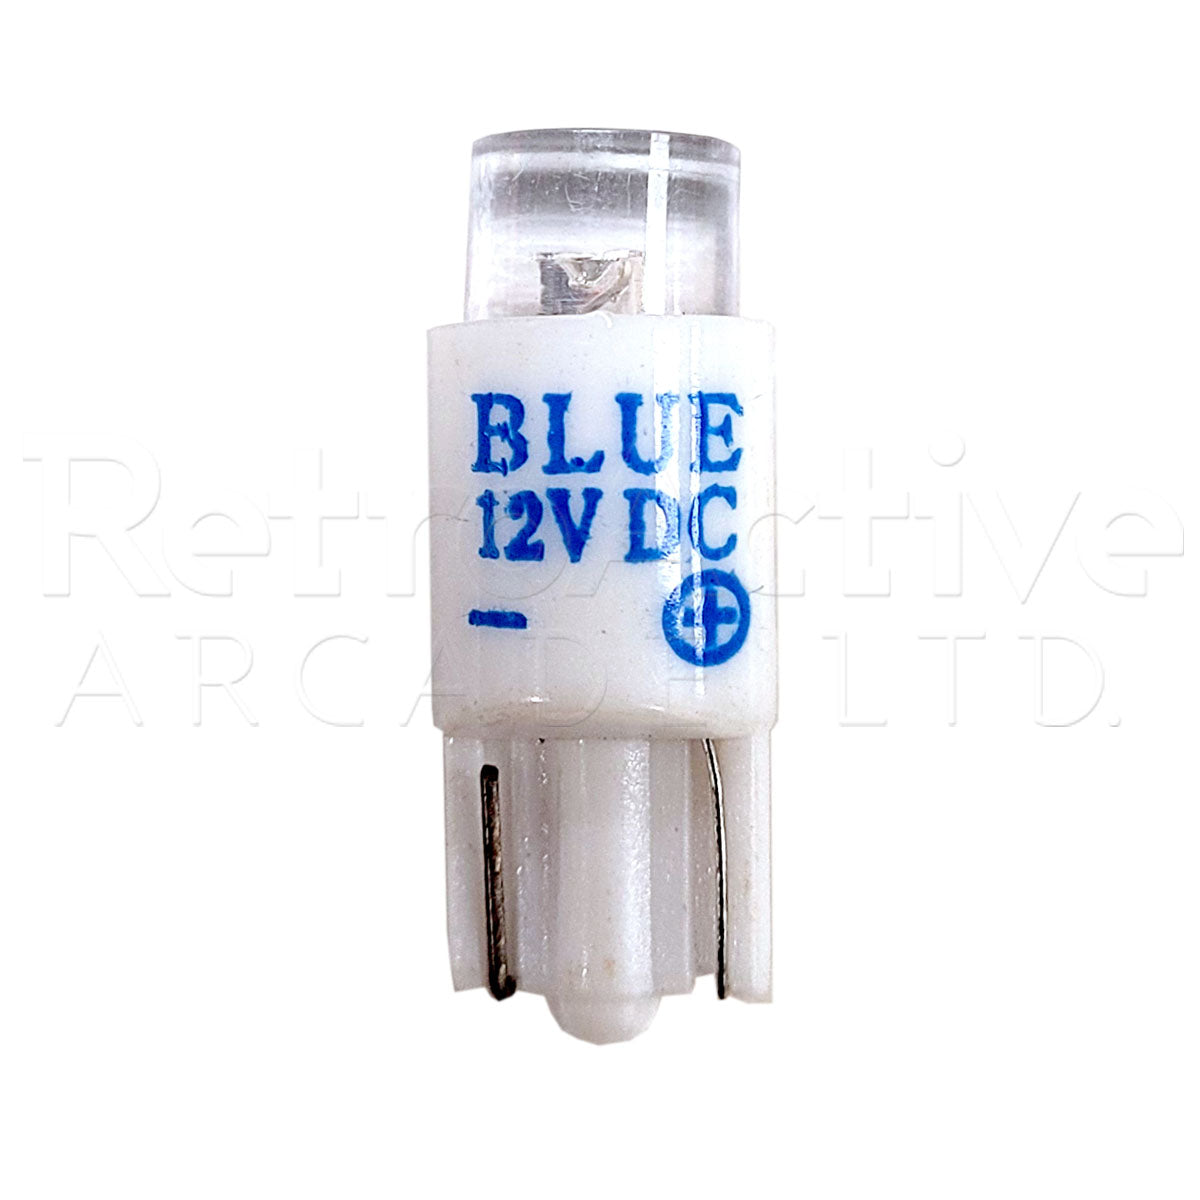 Super Bright +12V LED Lamps - Blue Pushbuttons Universal - Retro Active Arcade